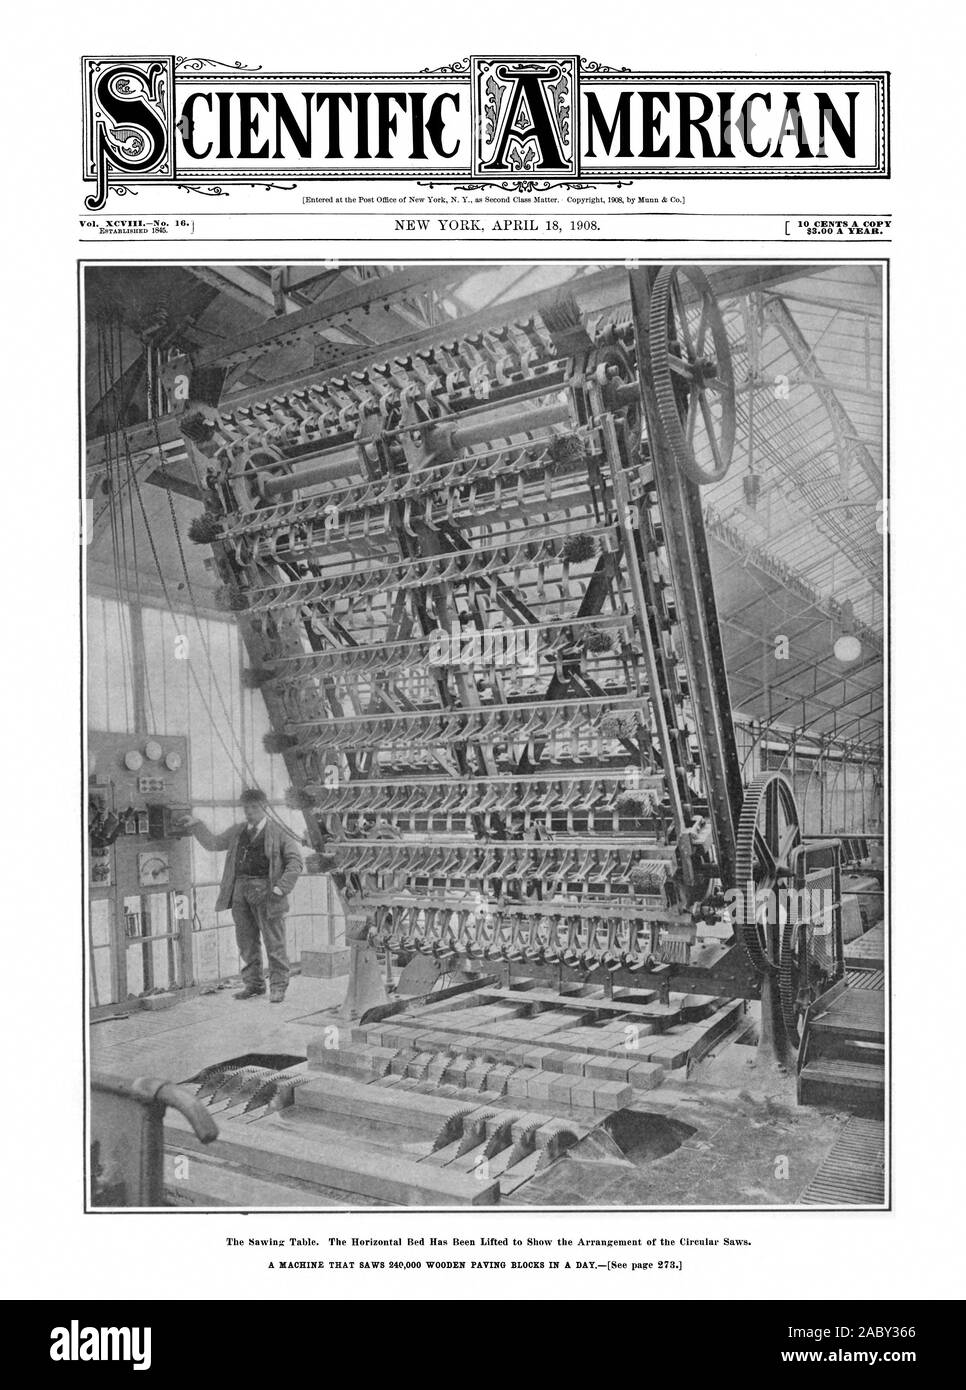 MERICA Vol. XCVIIINo. 16.1, scientific american, 1908-04-18, a machine that saws 240000 wooden paving blocks in a day Stock Photo